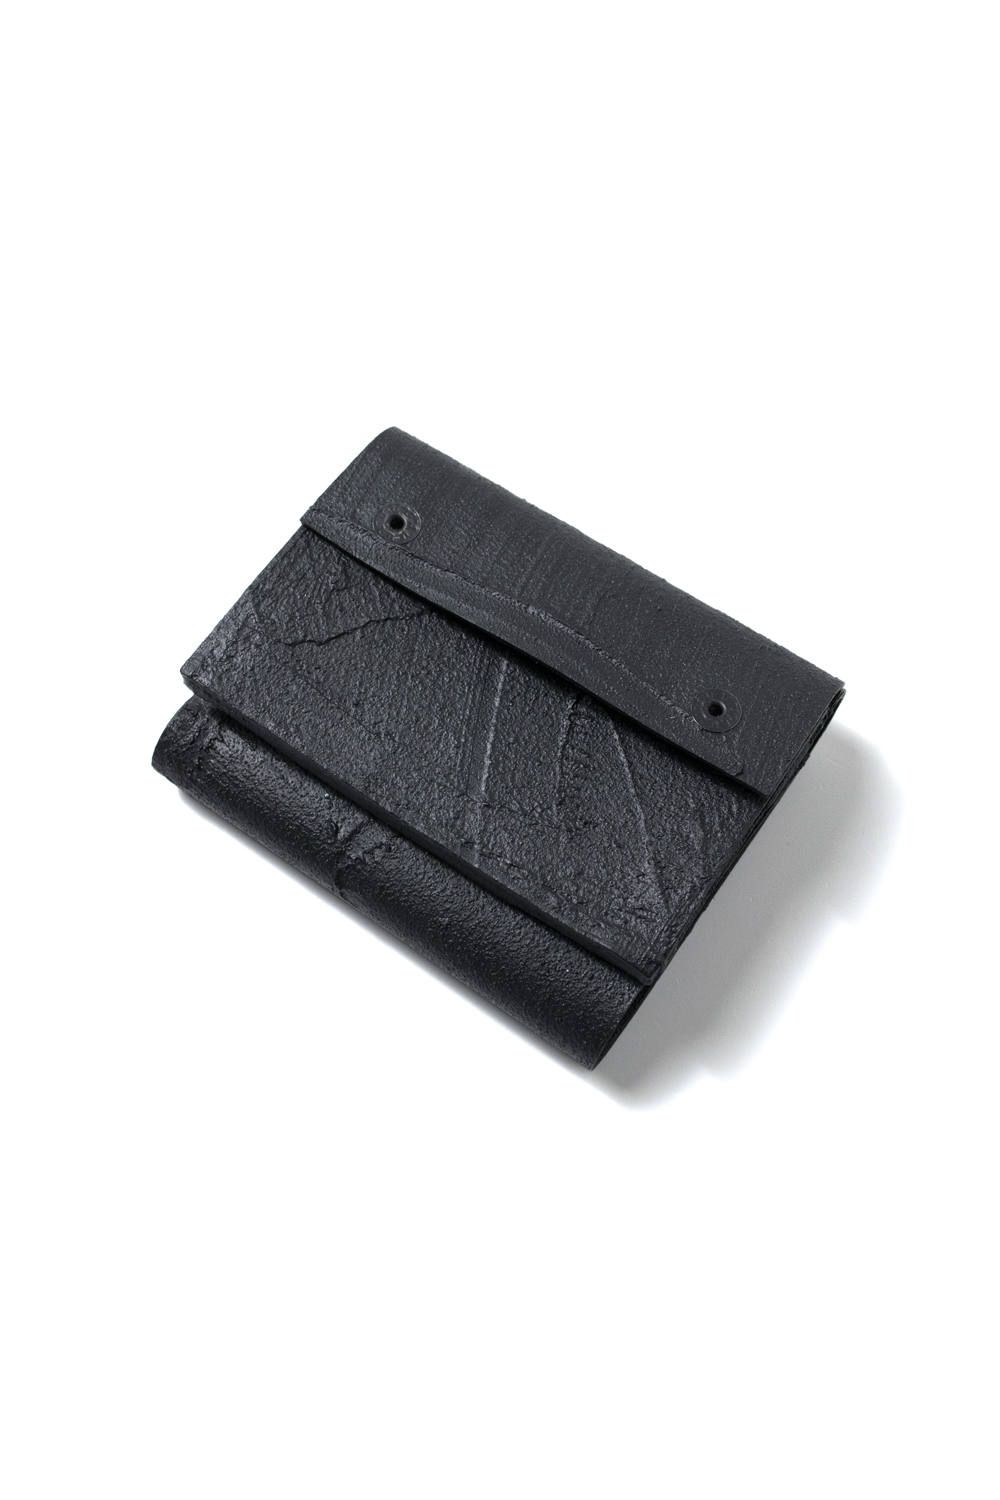 KAGARI YUSUKE - 三つ折り豆財布 [黒い壁] / mw11-bk | BONITA 